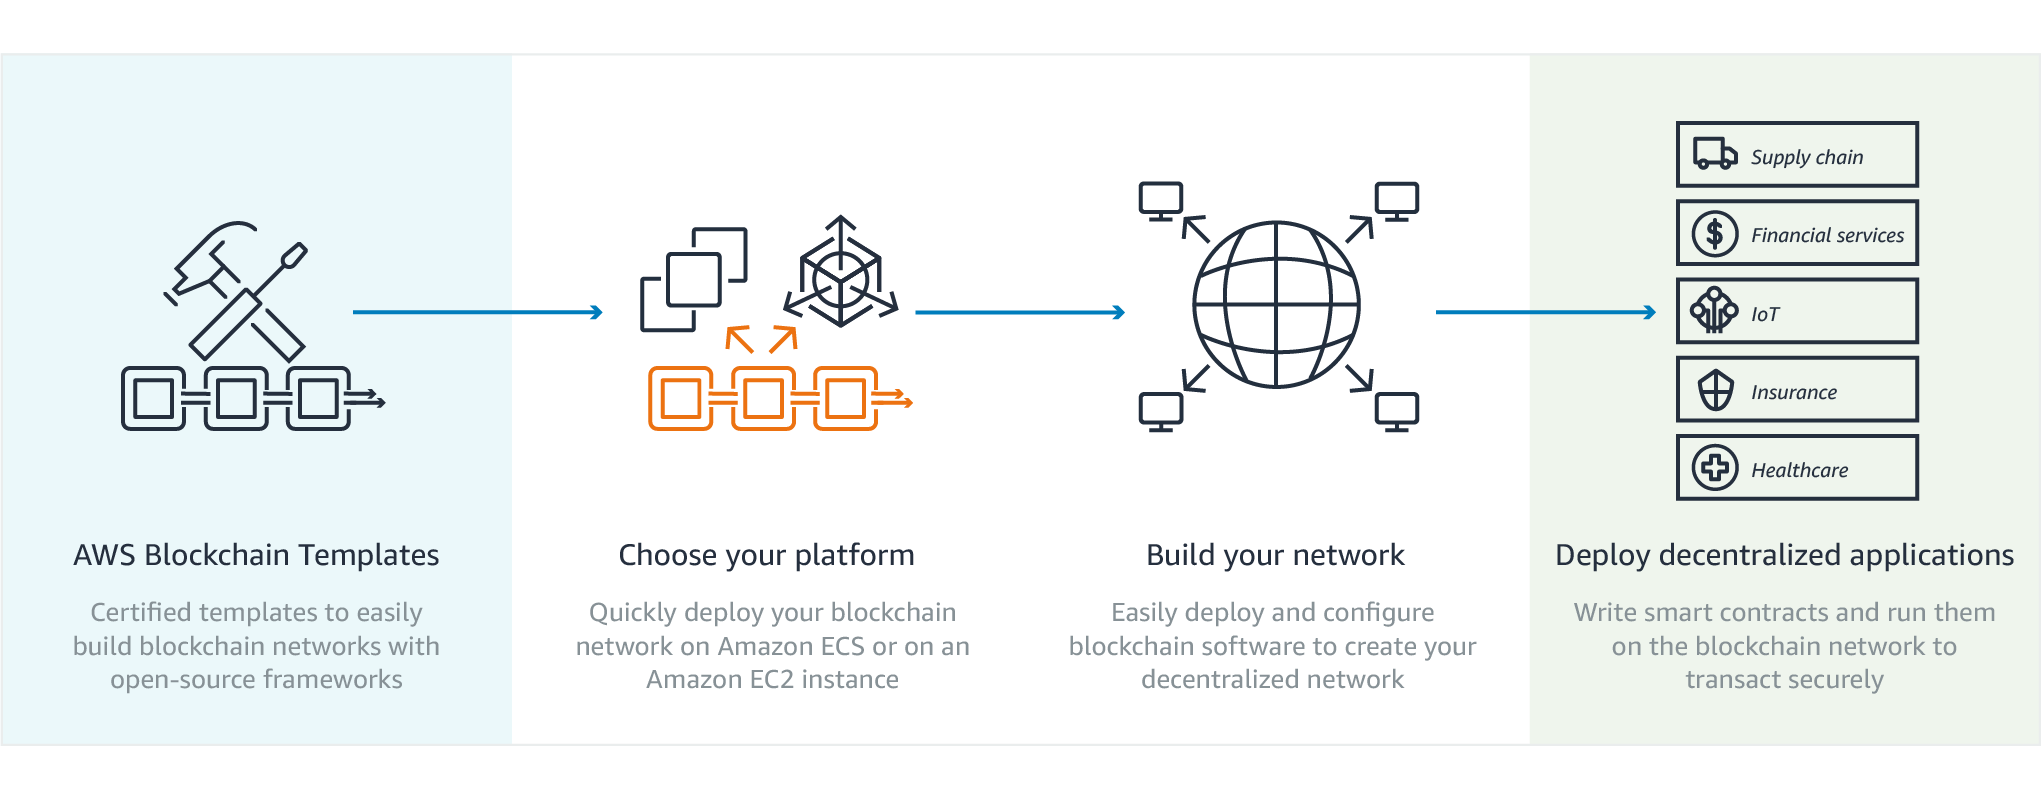 AWS Blockchain Template